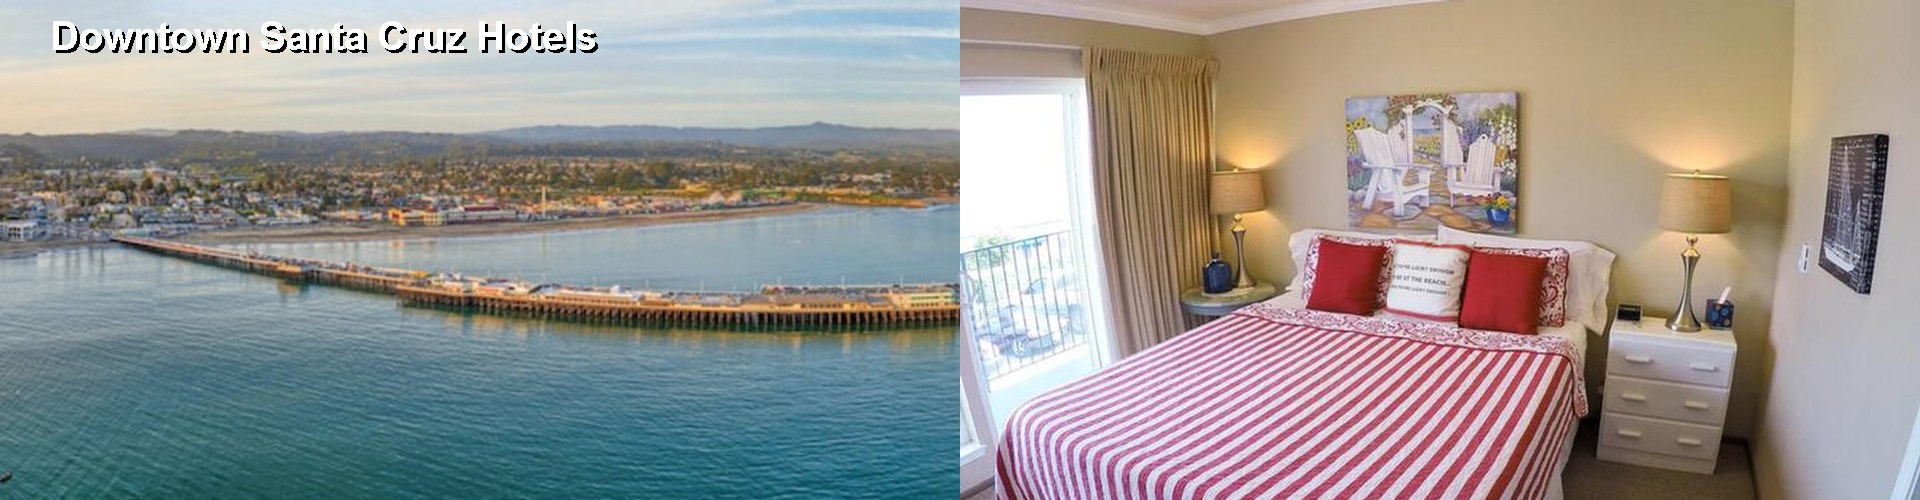 3 Best Hotels near Downtown Santa Cruz